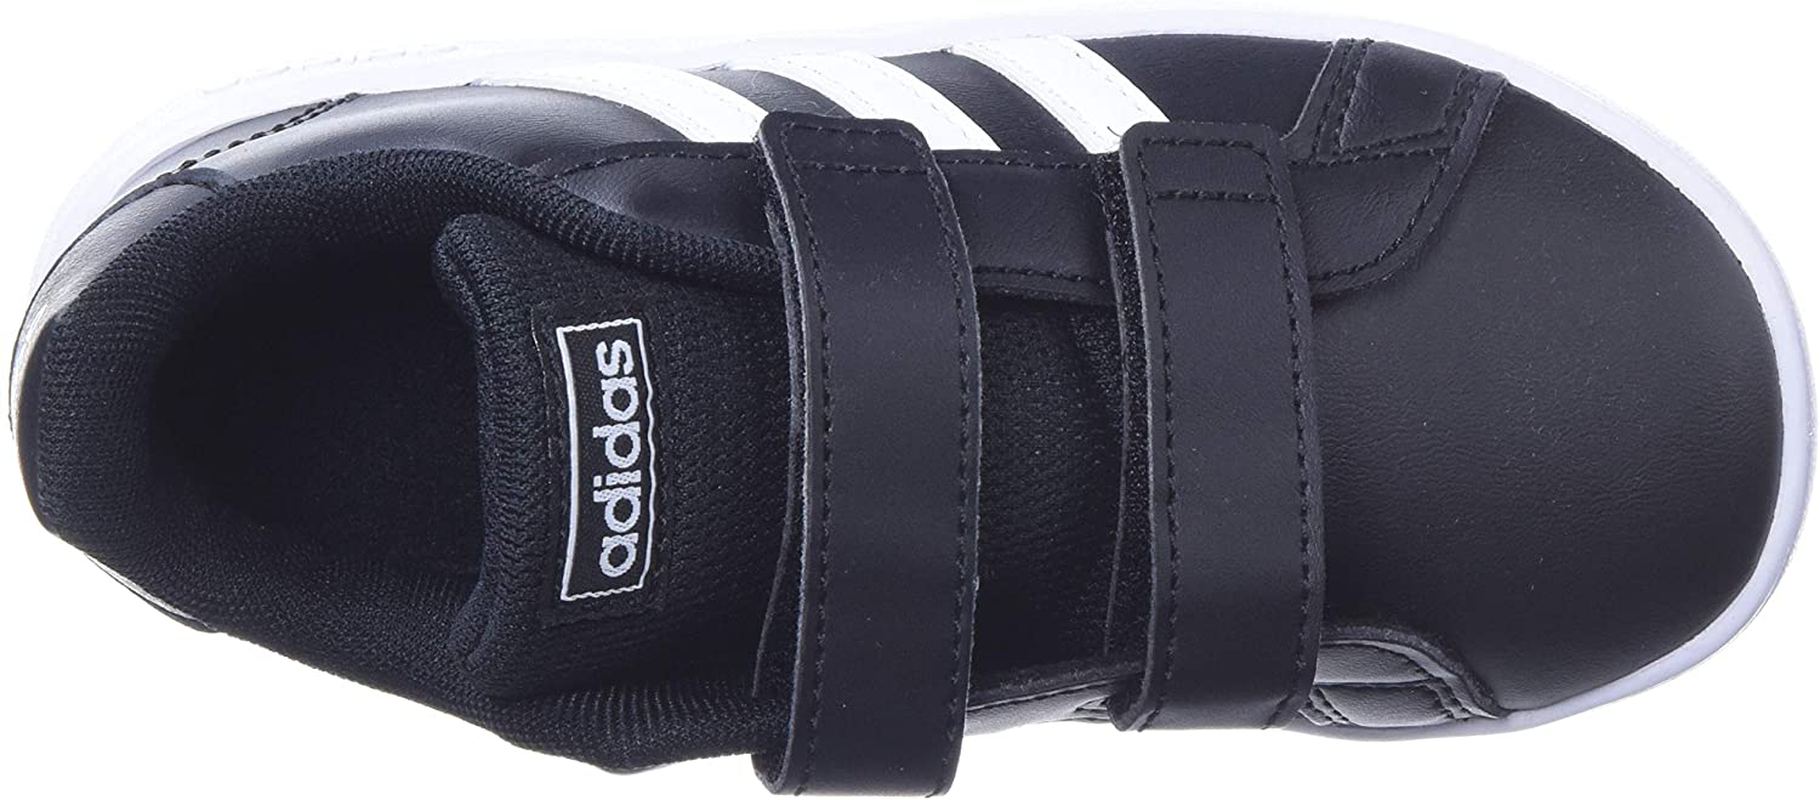 Adidas Unisex-Child Grand Court Tennis Shoe